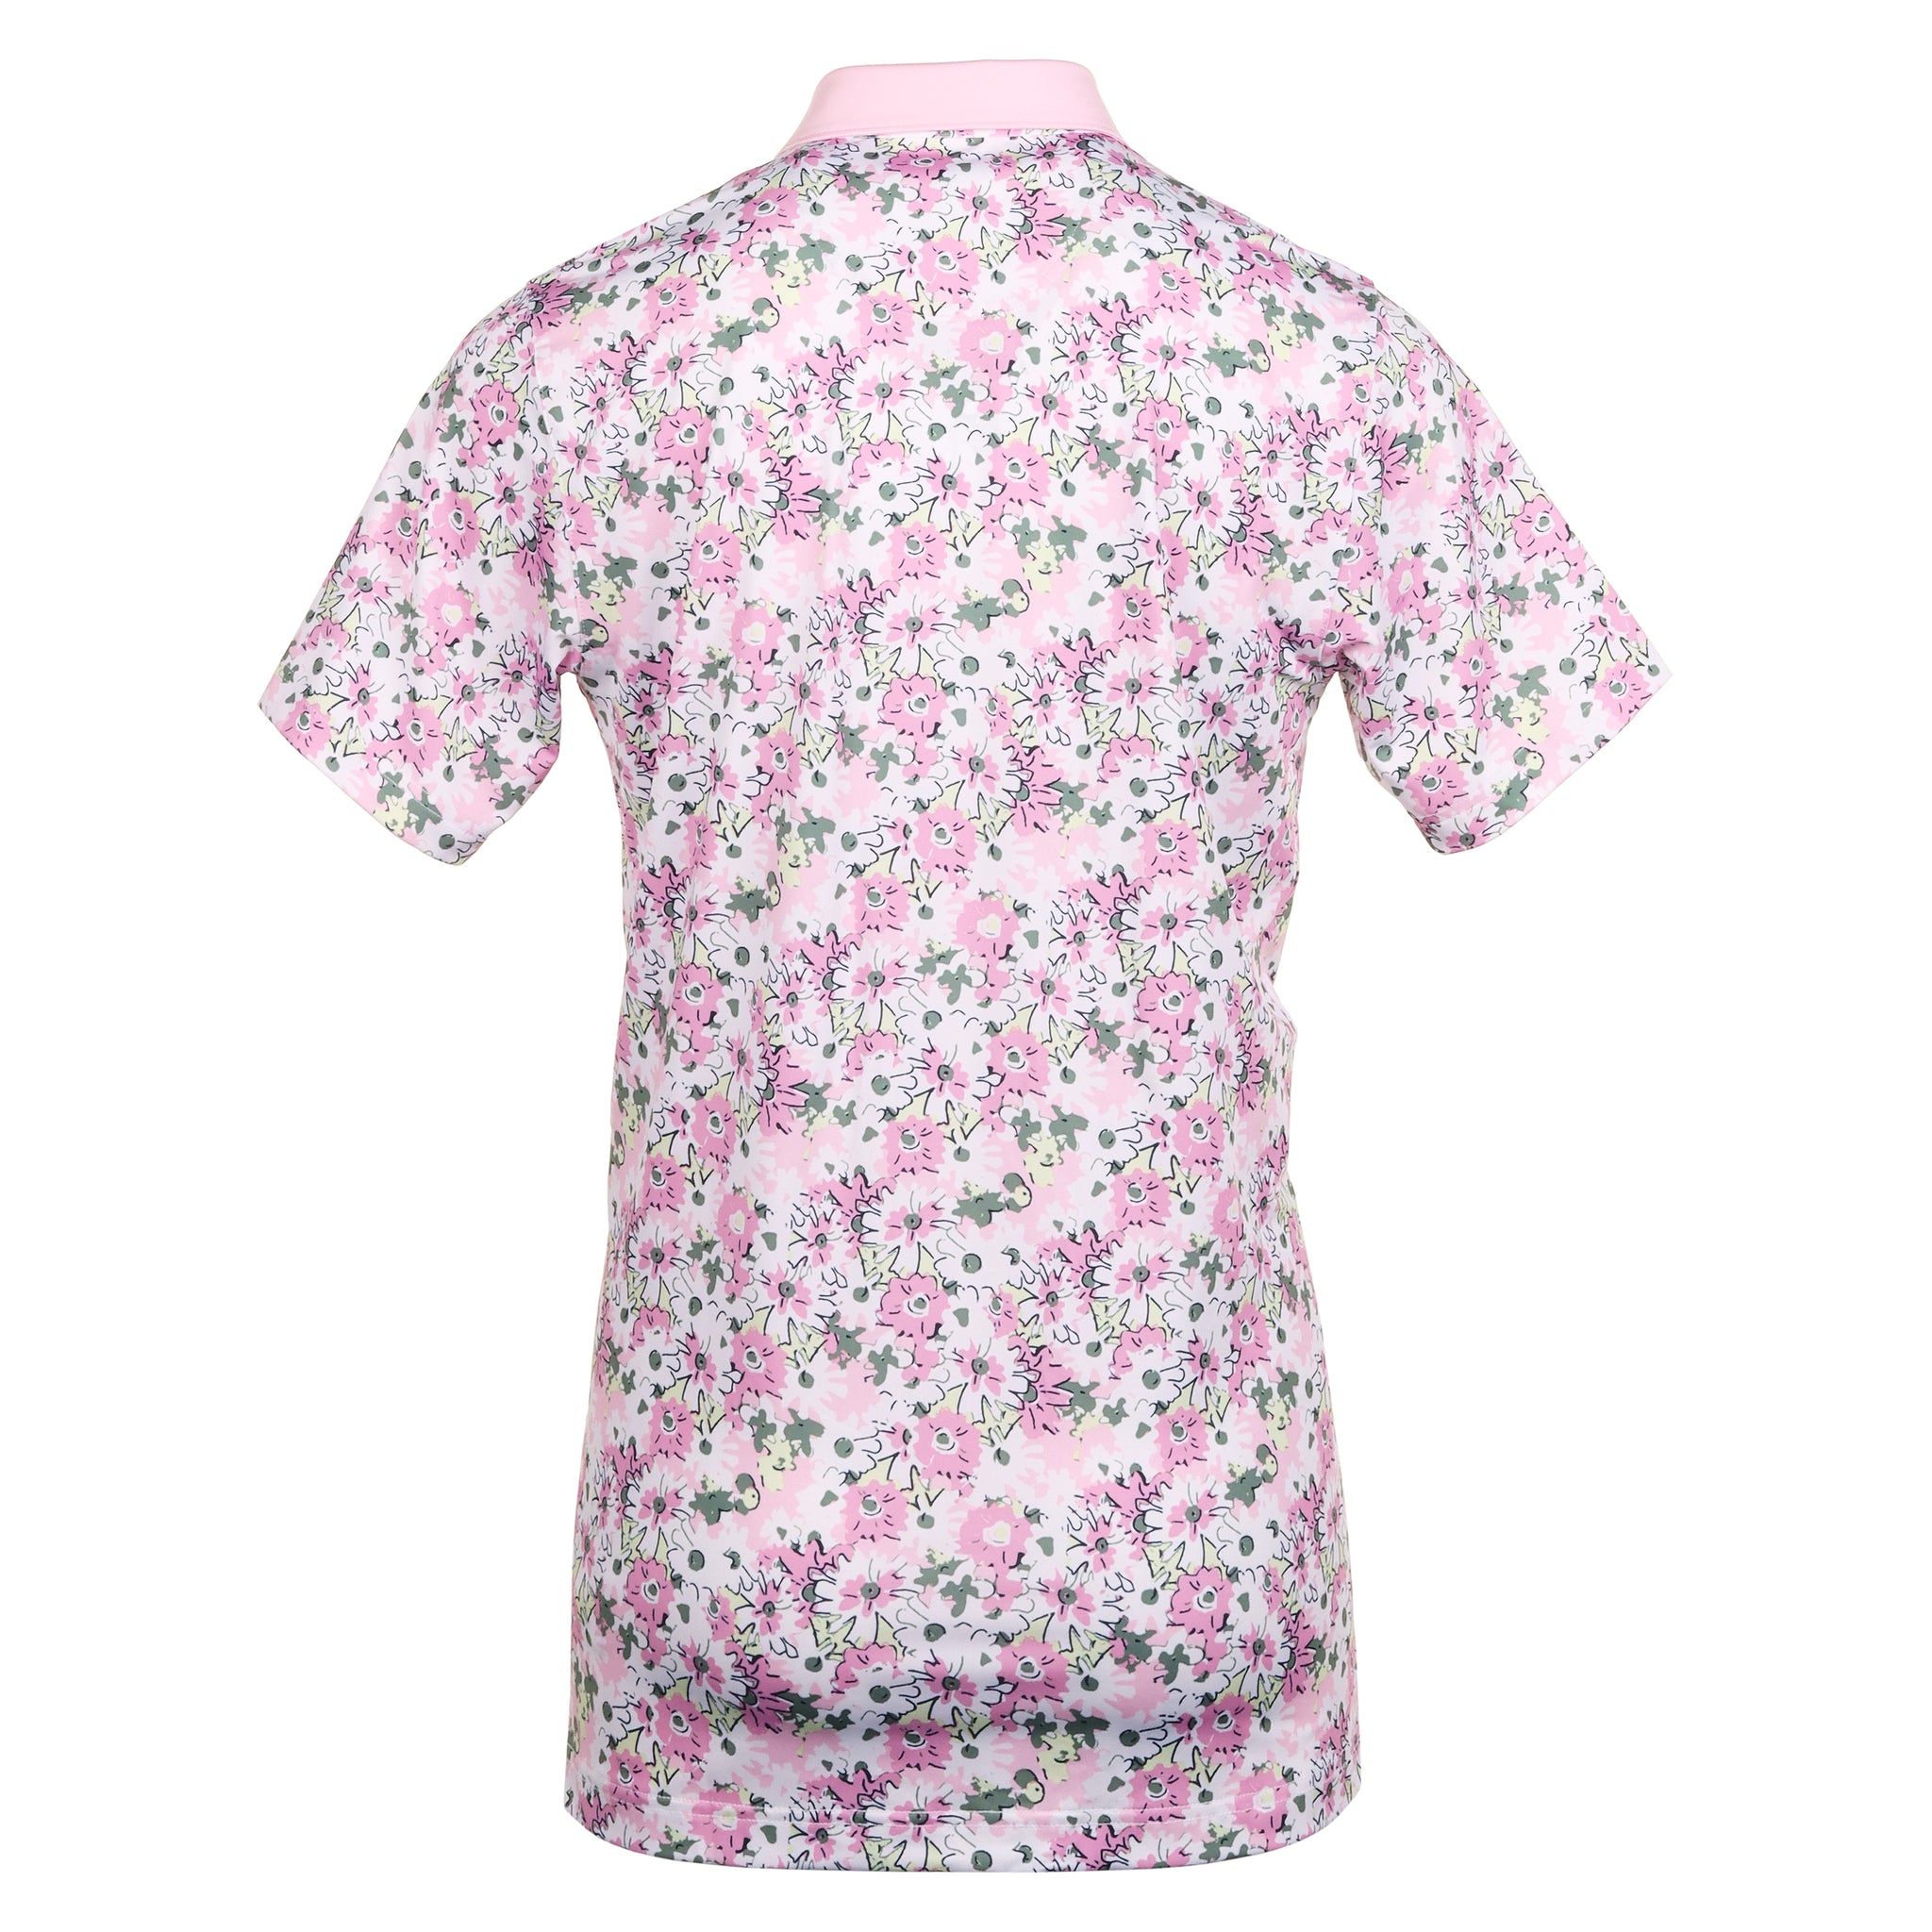 Puma Golf X Arnold Palmer Floral Shirt